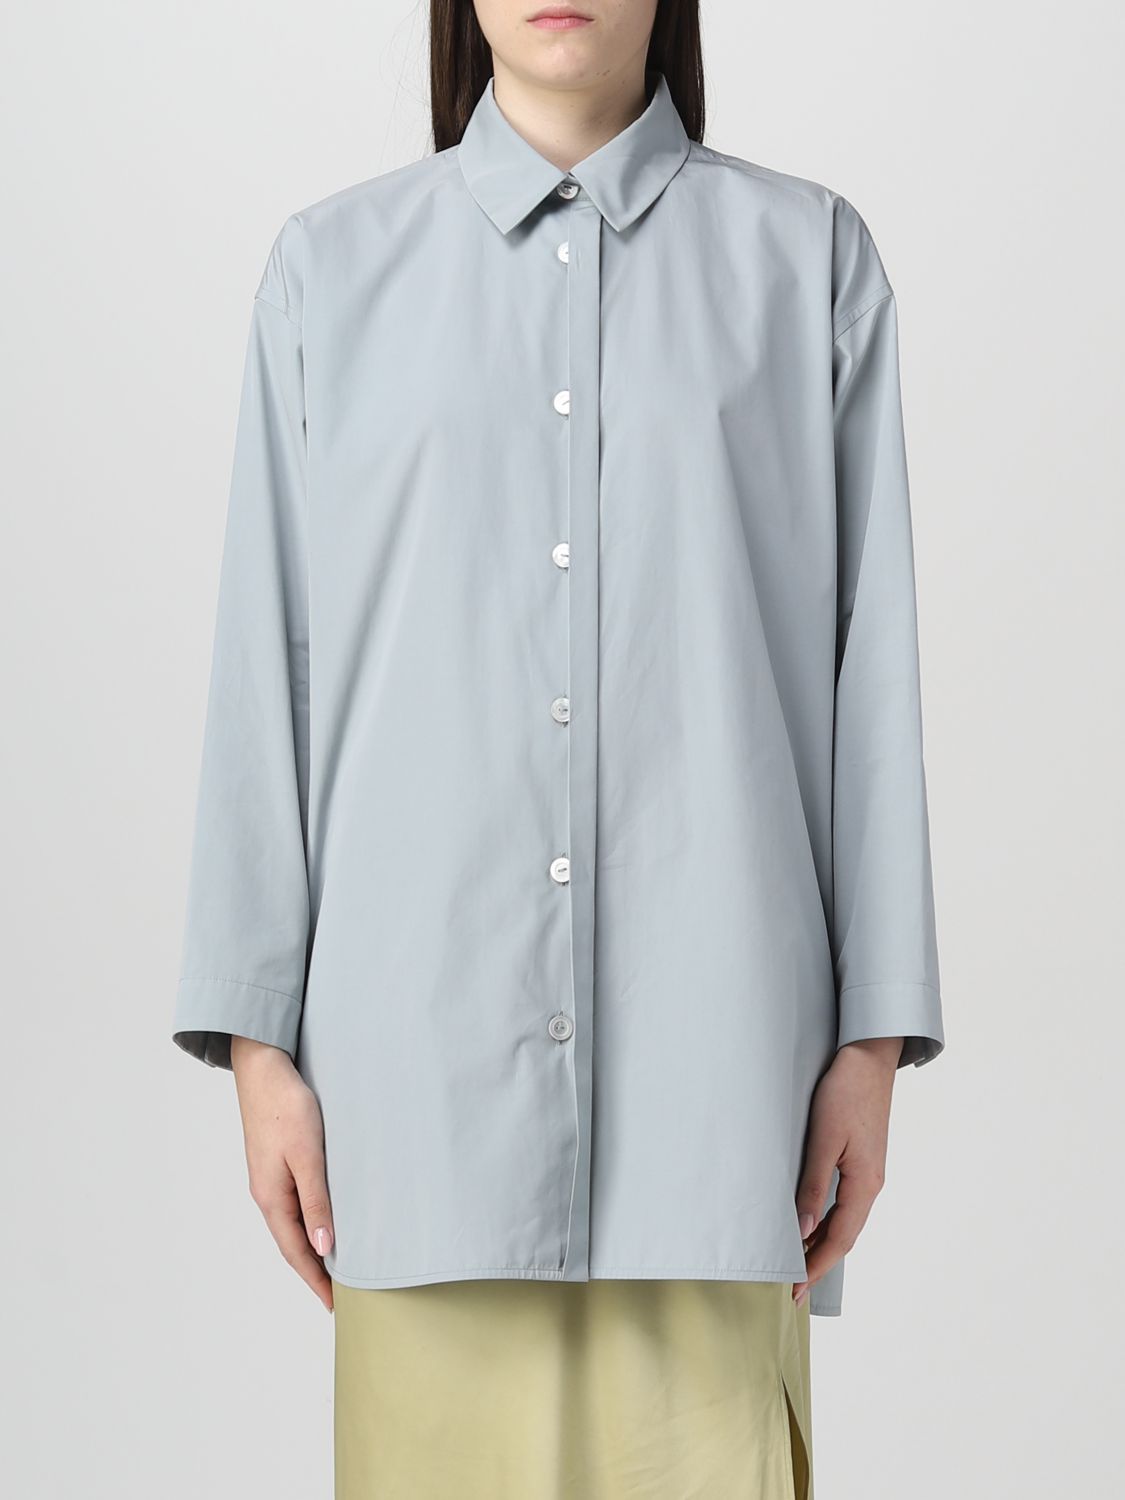 timmerman meesteres hoe te gebruiken JIL SANDER: shirt for woman - Grey | Jil Sander shirt J02DL0122J45146  online on GIGLIO.COM